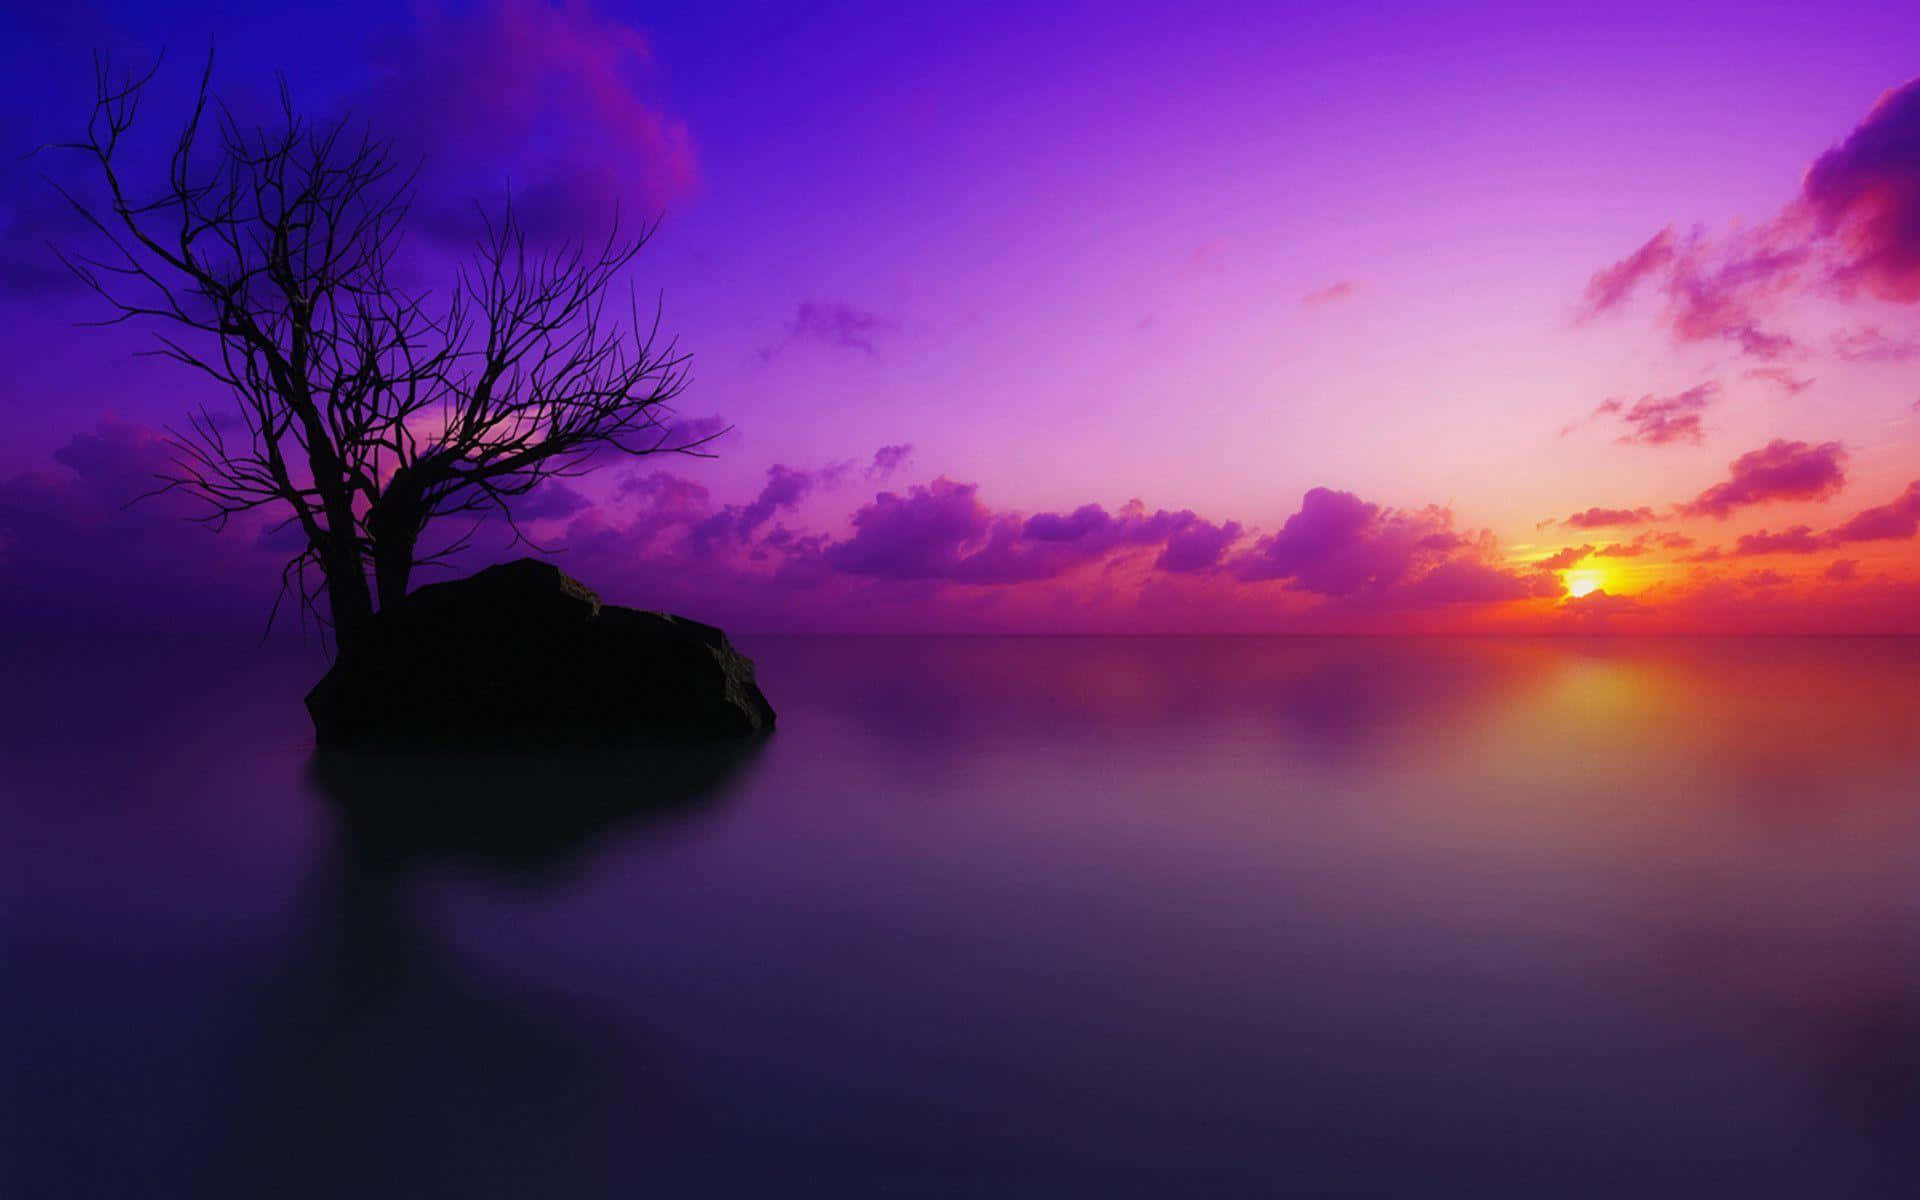 Barren Tree On A Blue And Purple Sunset Wallpaper